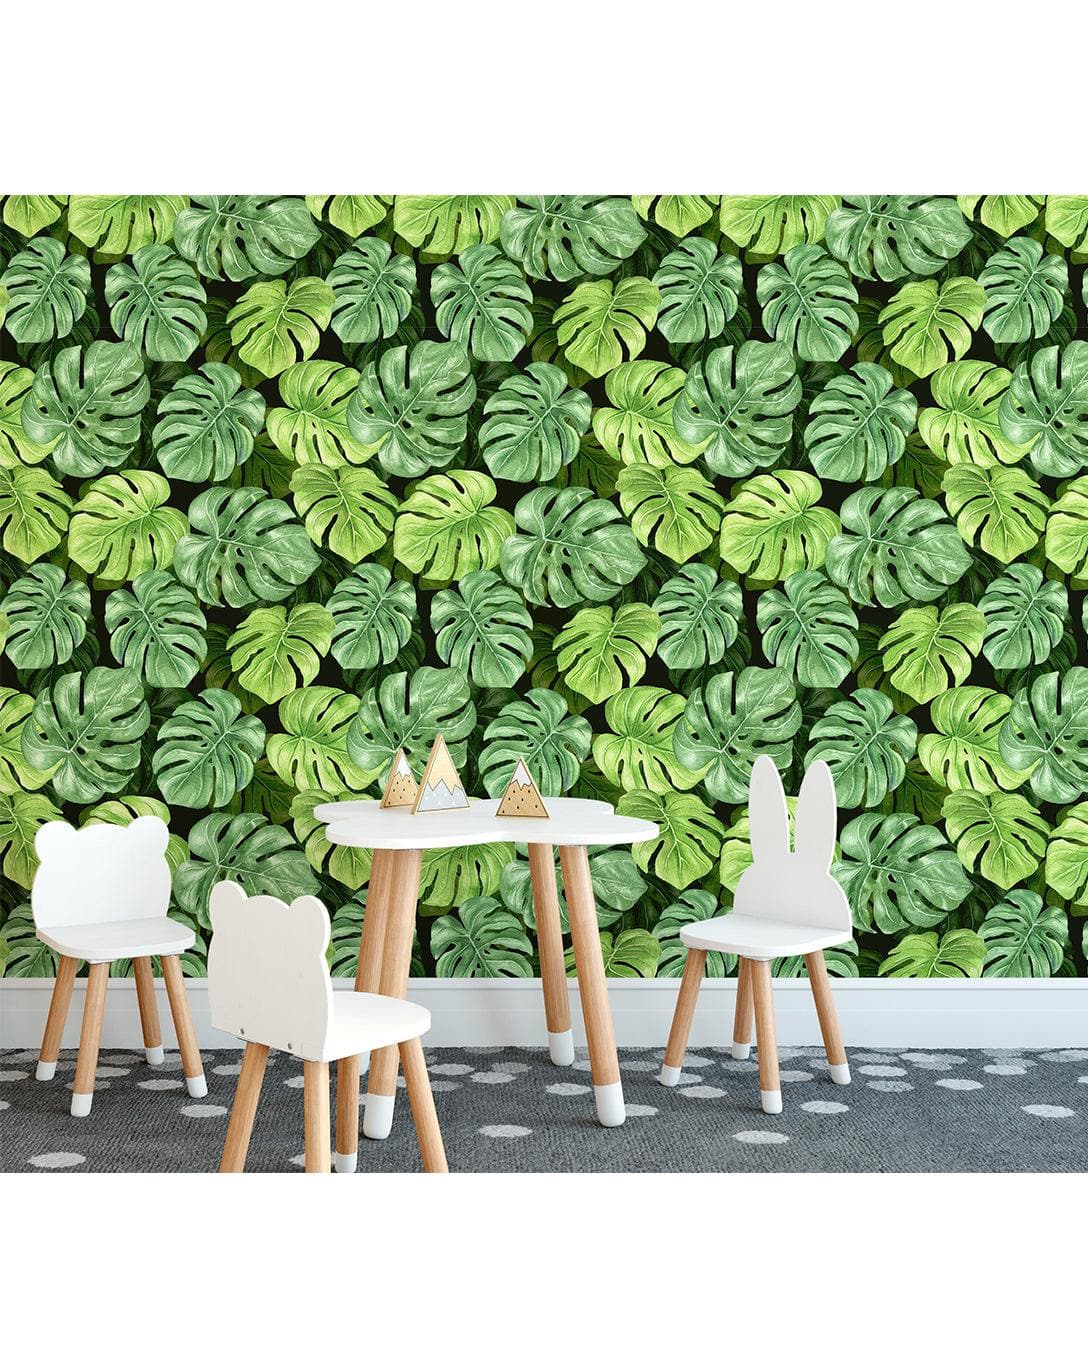 Green Tropical Monstera Leaf Wallpaper Green Tropical Monstera Leaf Wallpaper Green Tropical Monstera Leaf Wallpaper 